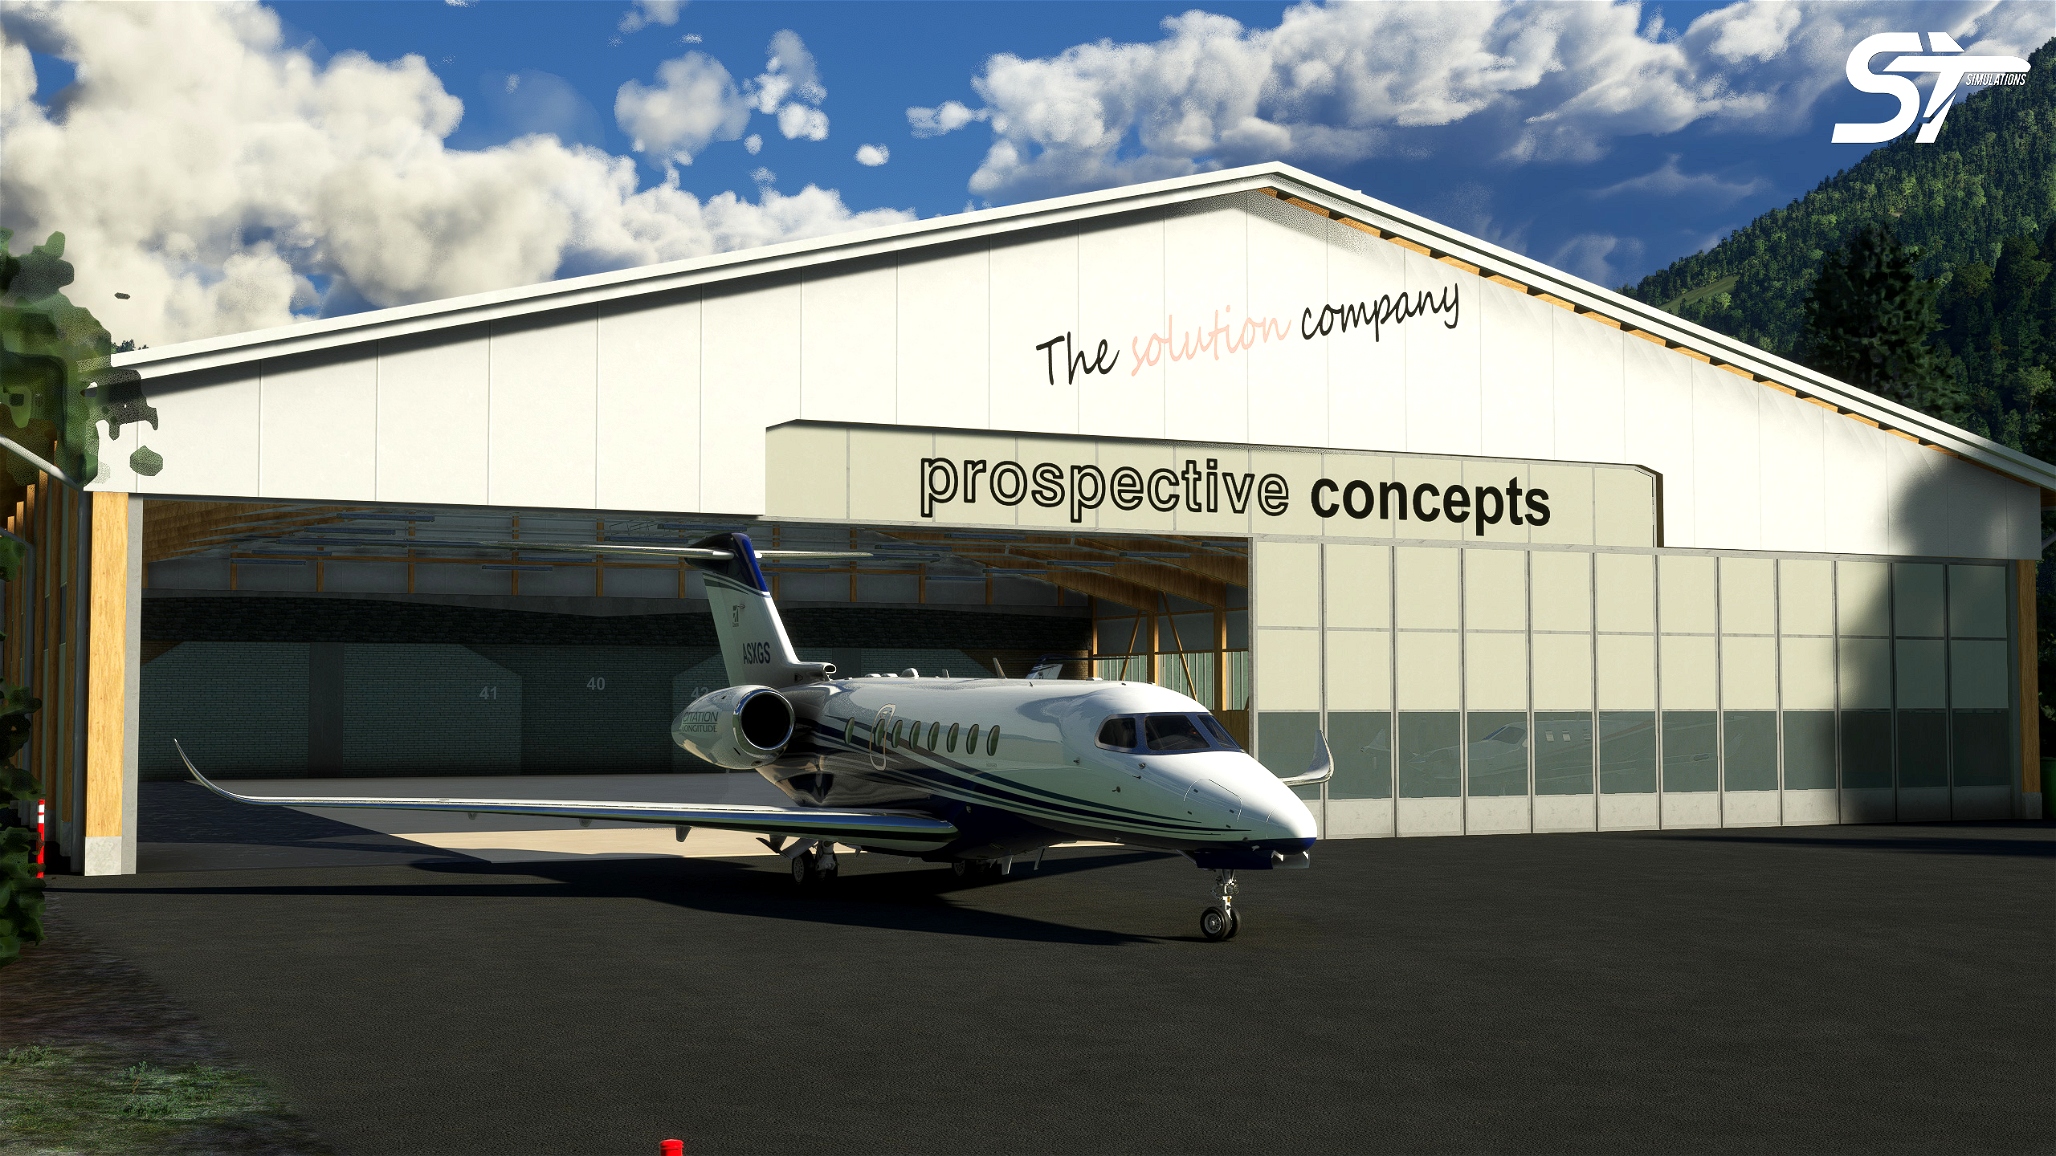 LSTS - St. Stephan Airport Microsoft Flight Simulator